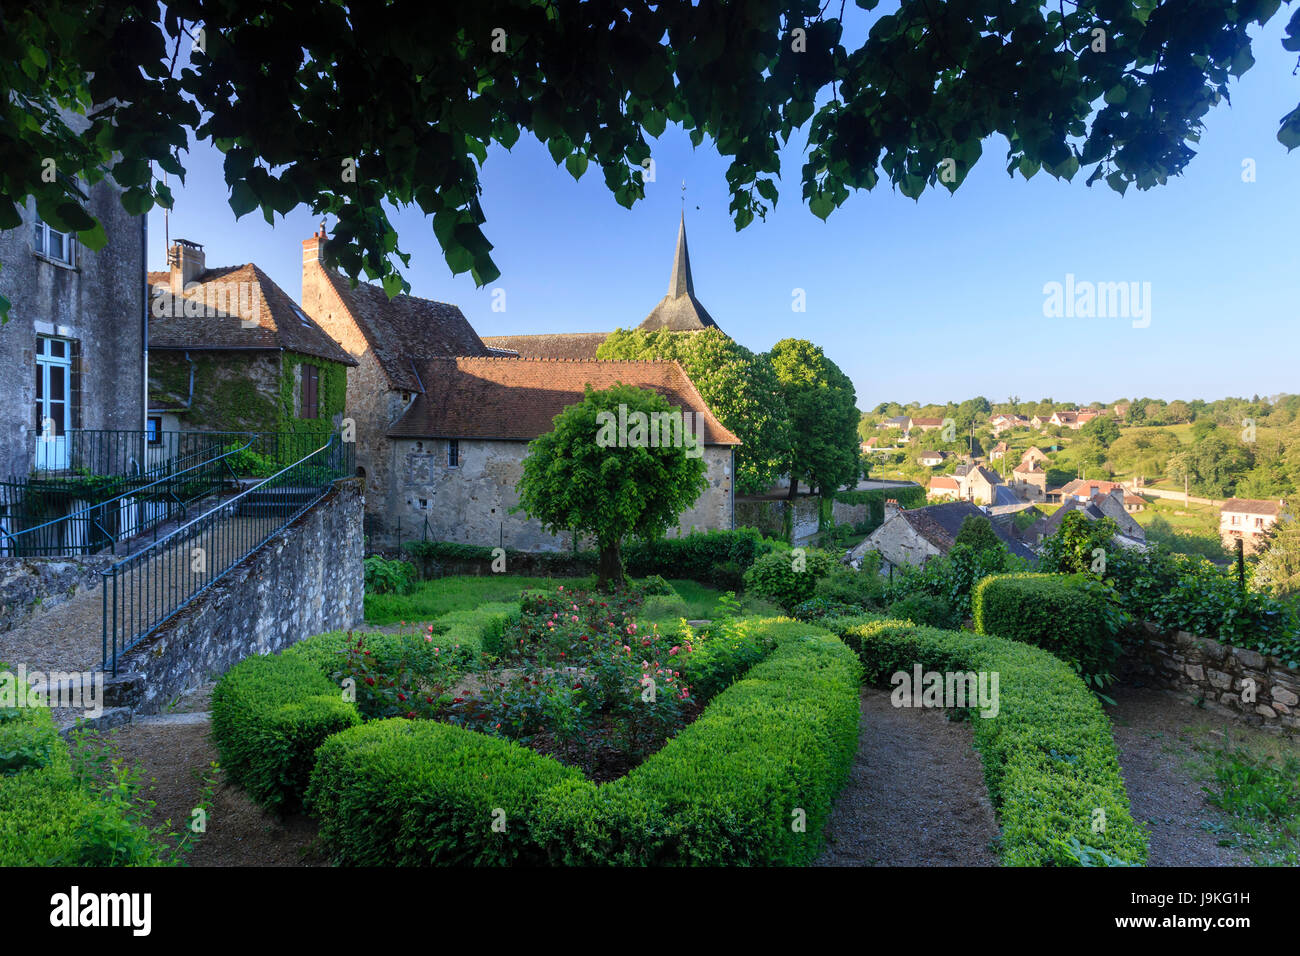 Frankreich, Indre, Saint Benoît du Sault, beschriftet Les Plus beaux villages de France (Schönste Dörfer Frankreichs), Garten und Kirche Stockfoto